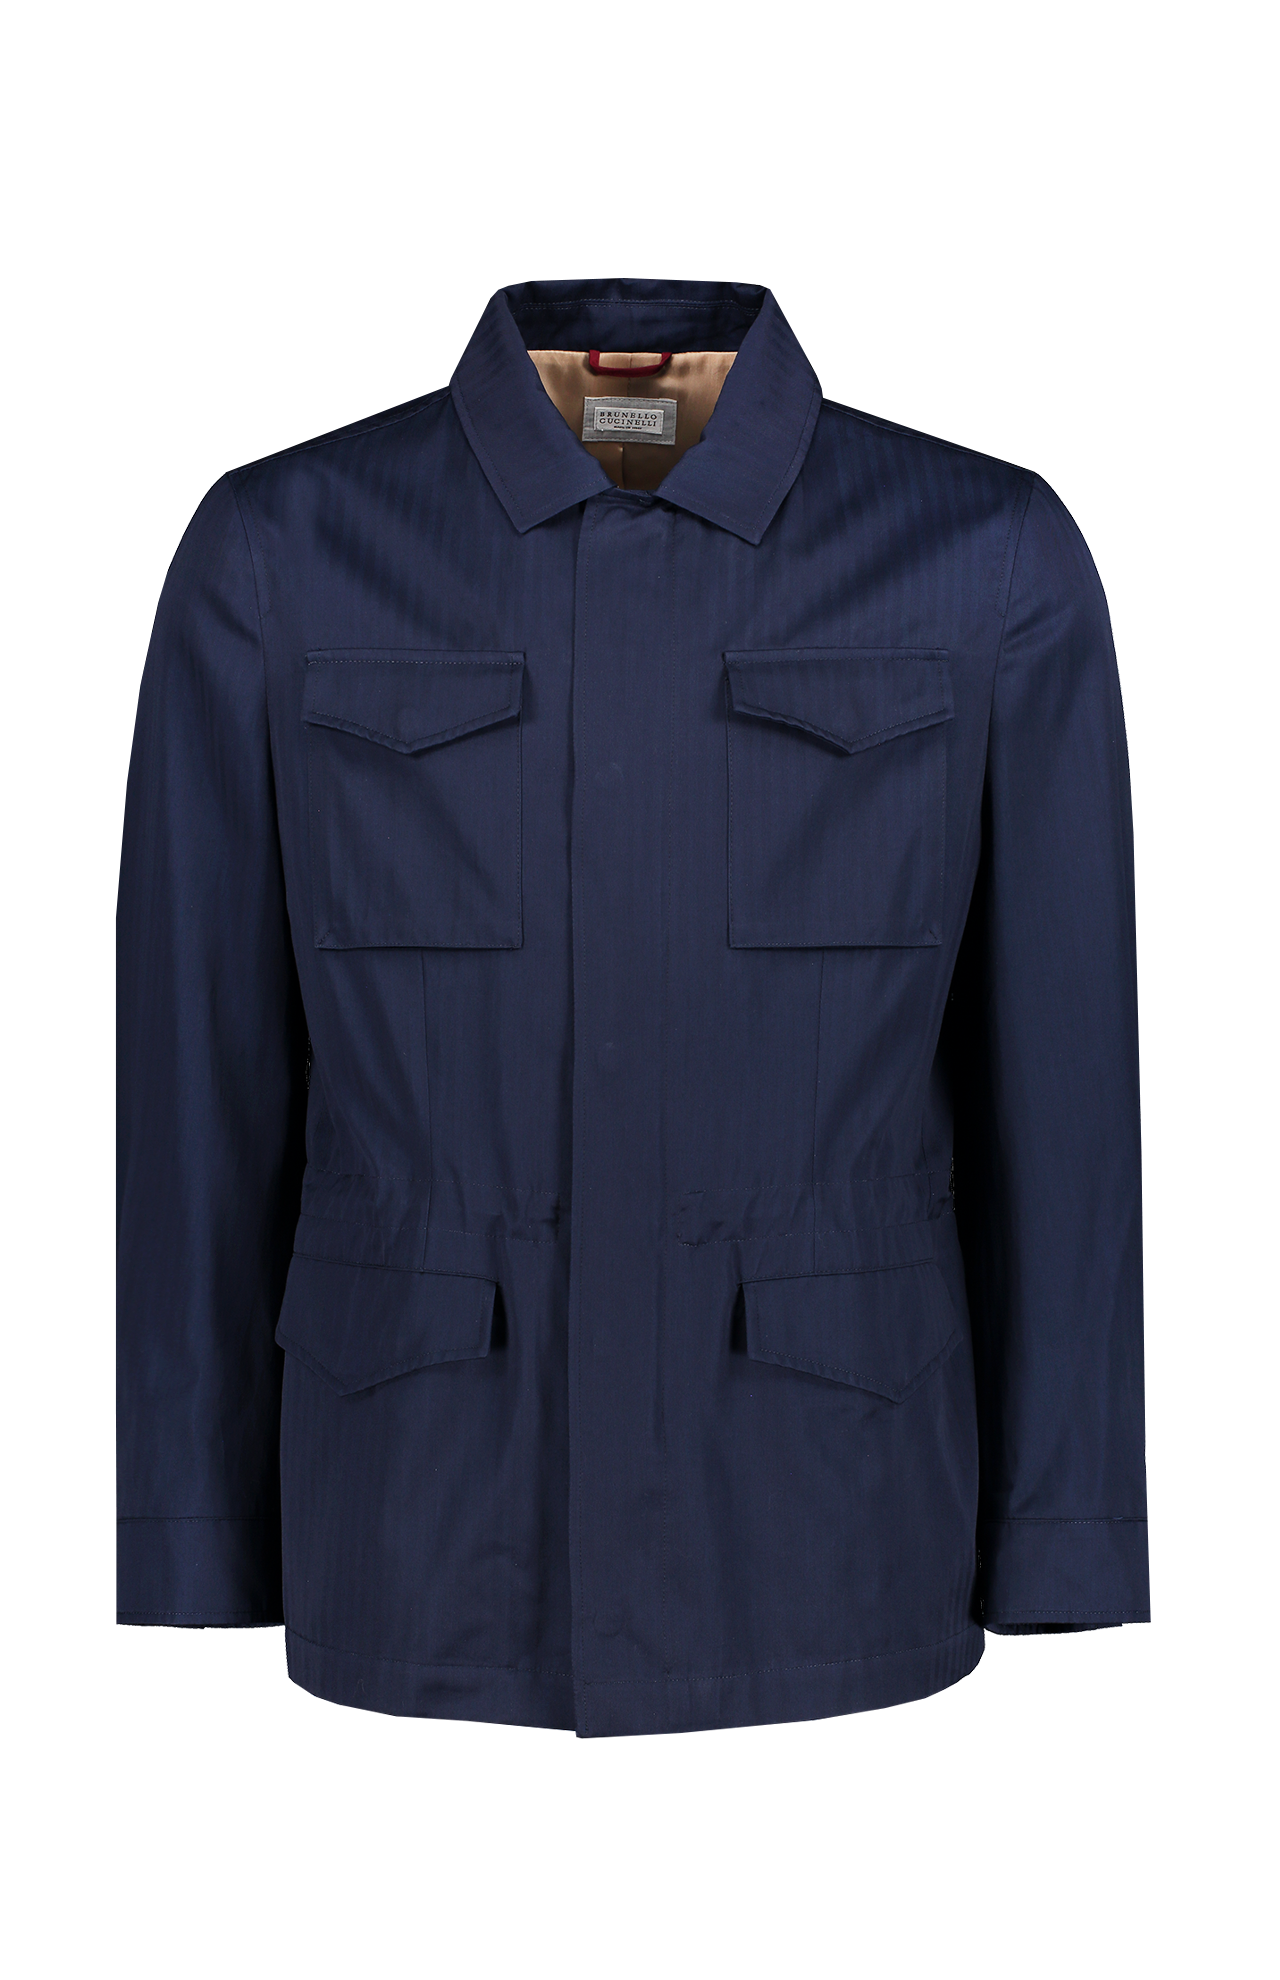 Brunello Cucinelli Men's Solaro Field Jacket | A.K. Rikk's